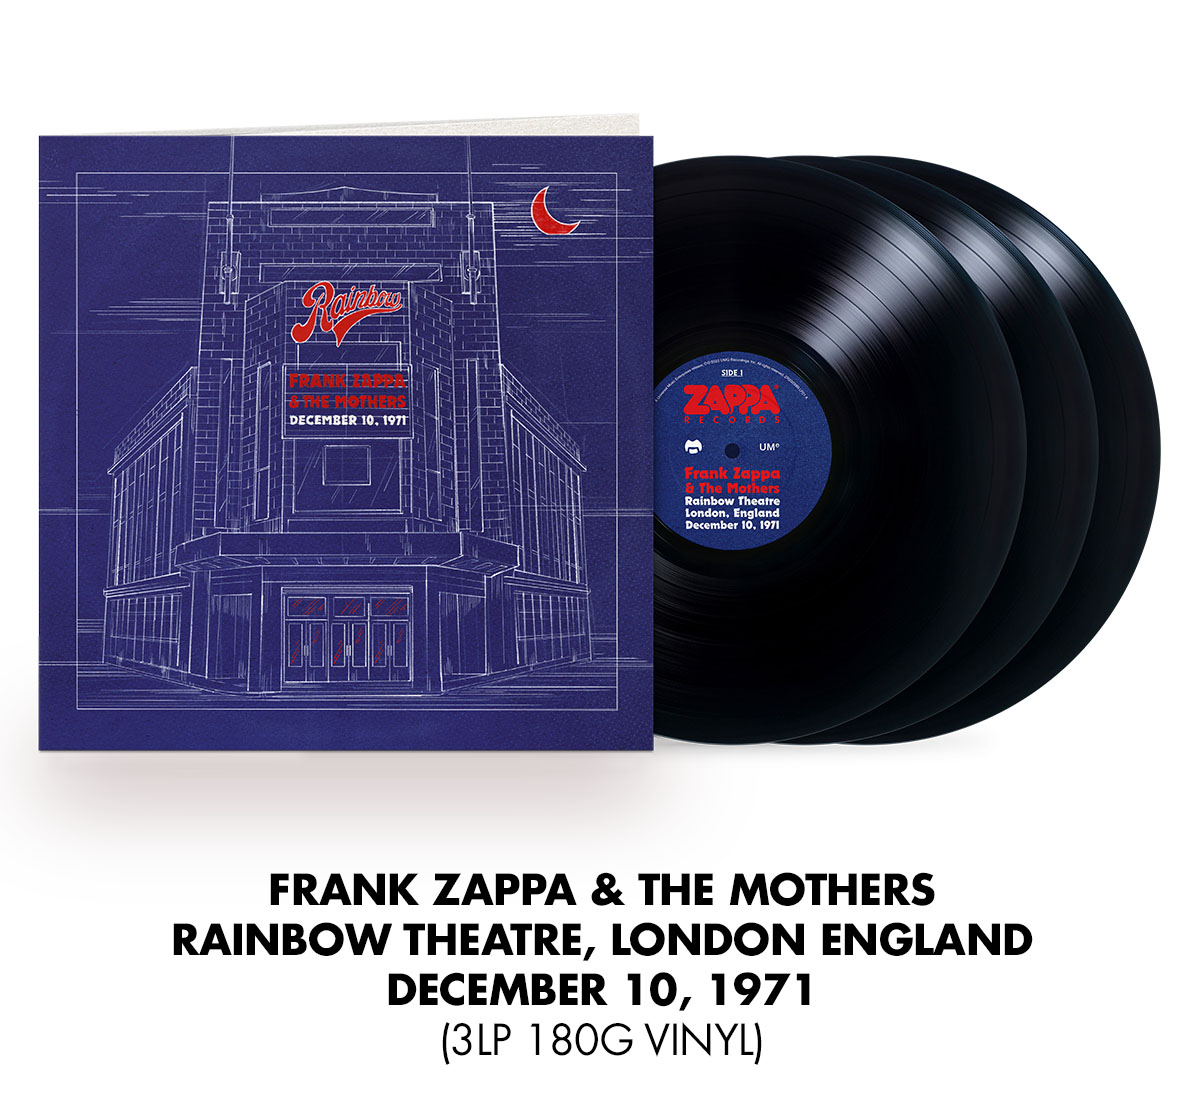 Frank Zappa & The Mothers - Rainbow Theatre, London England, December 10, 1971